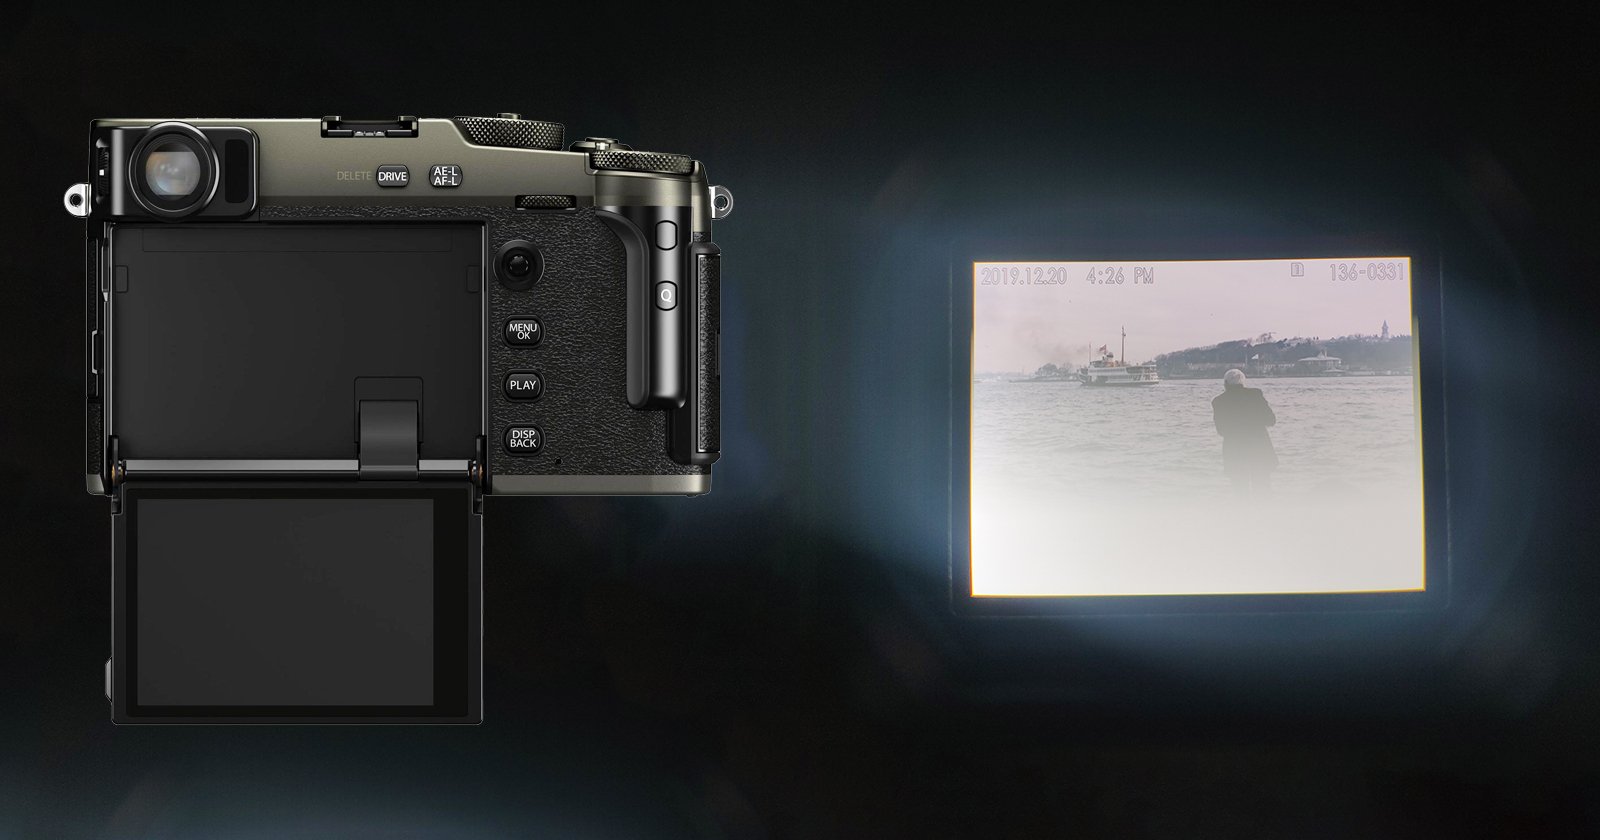 Fuji confirma que un importante problema de EVF afecta a un "pequeño porcentaje" de cámaras X-Pro3